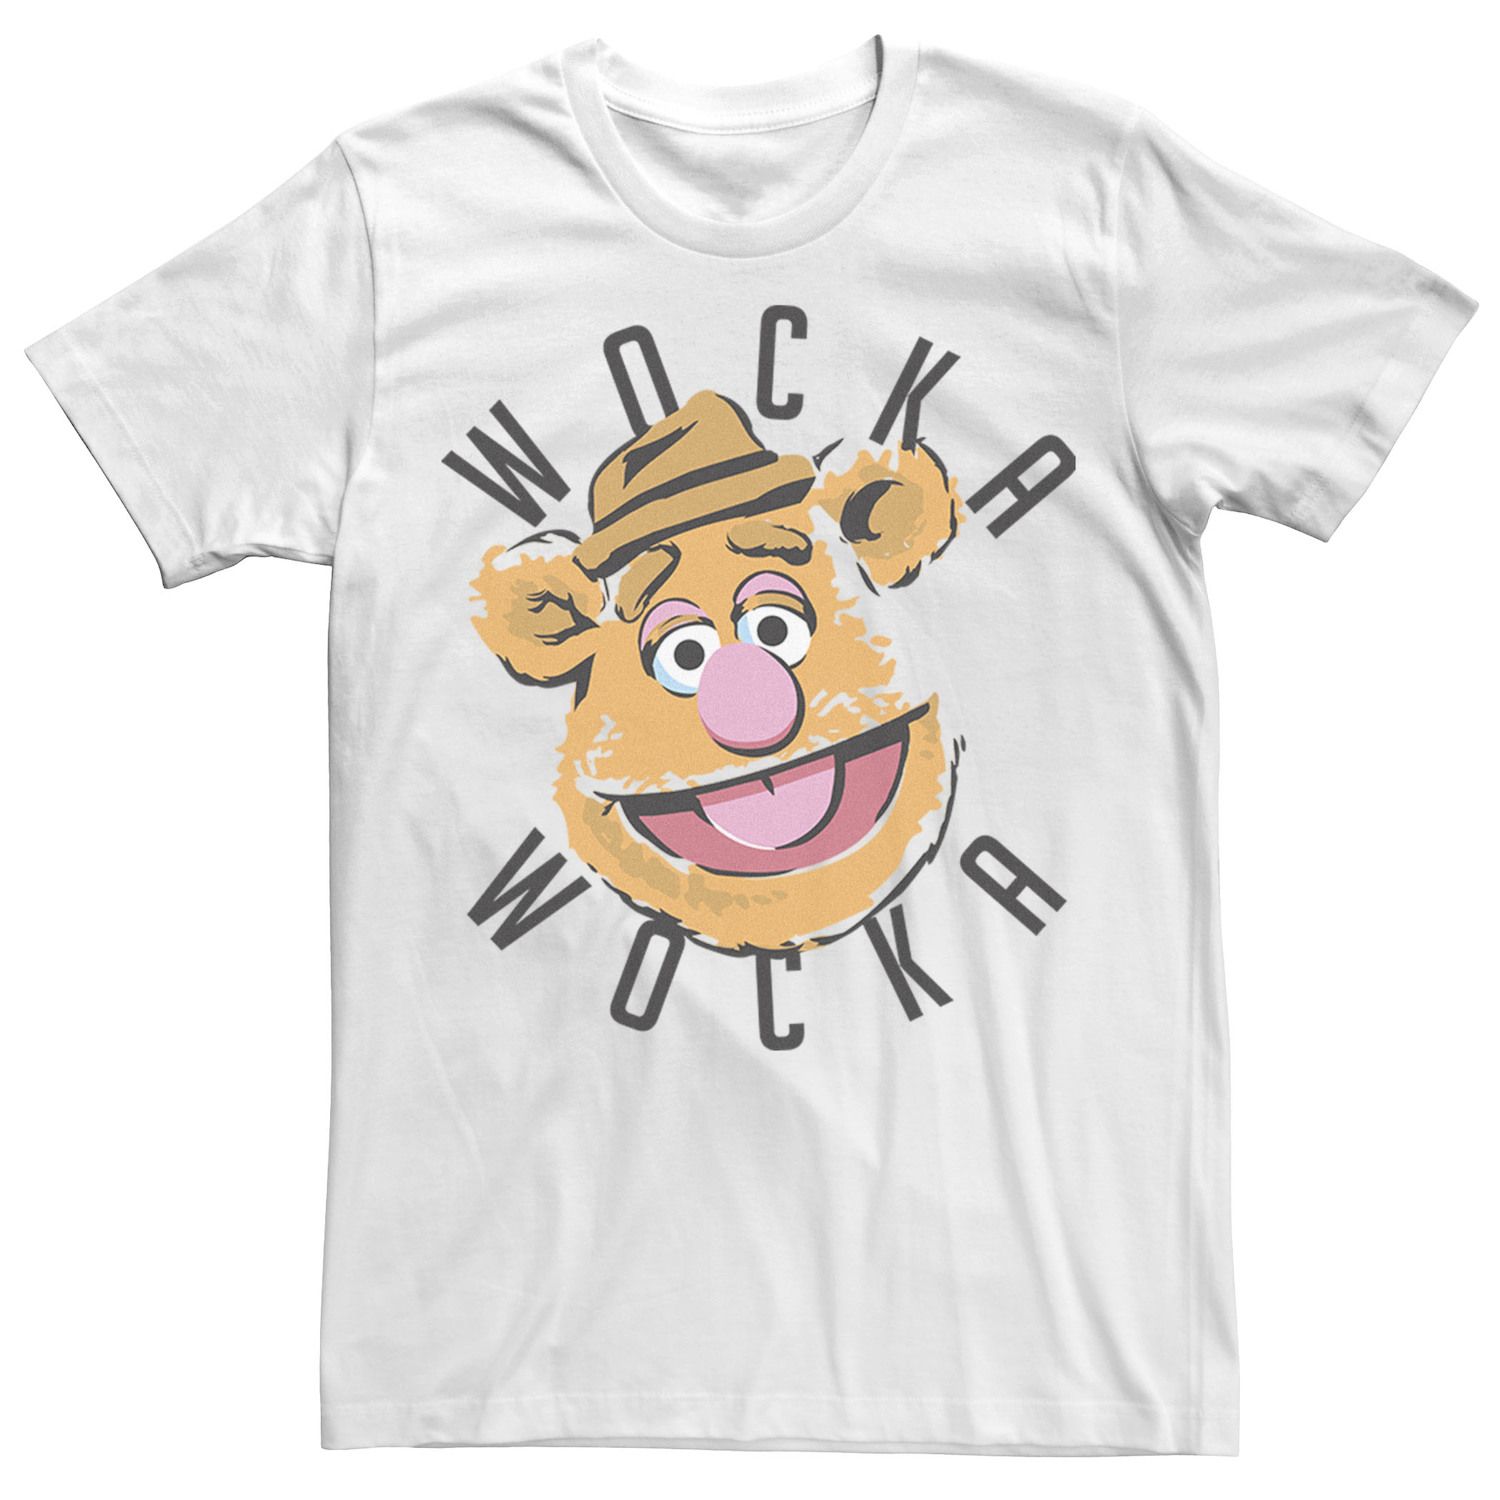 Мужская футболка Muppet Wocka Wocka с большим лицом Licensed Character